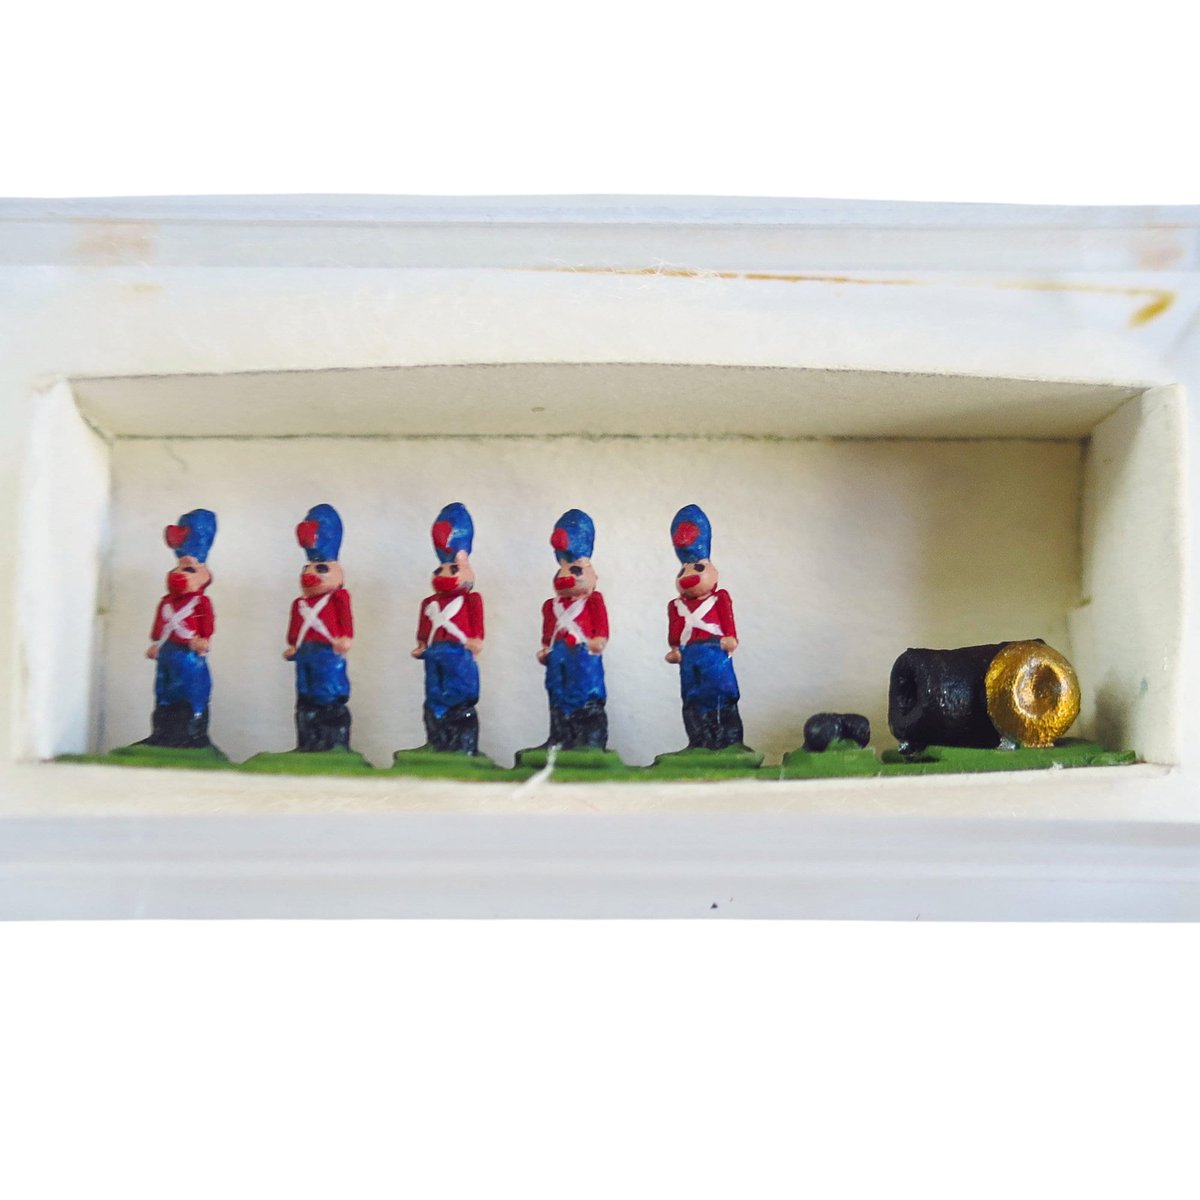 Vintage Handmade Micro 1:144 Soldiers and Cannon • Dolls Toy • Vintage Micro Miniature Model One of a Kind tuppu.net/15bbfaa8 #VintageFun #Etsyteamunity #SMILEtt23 #SwirlingOrange11